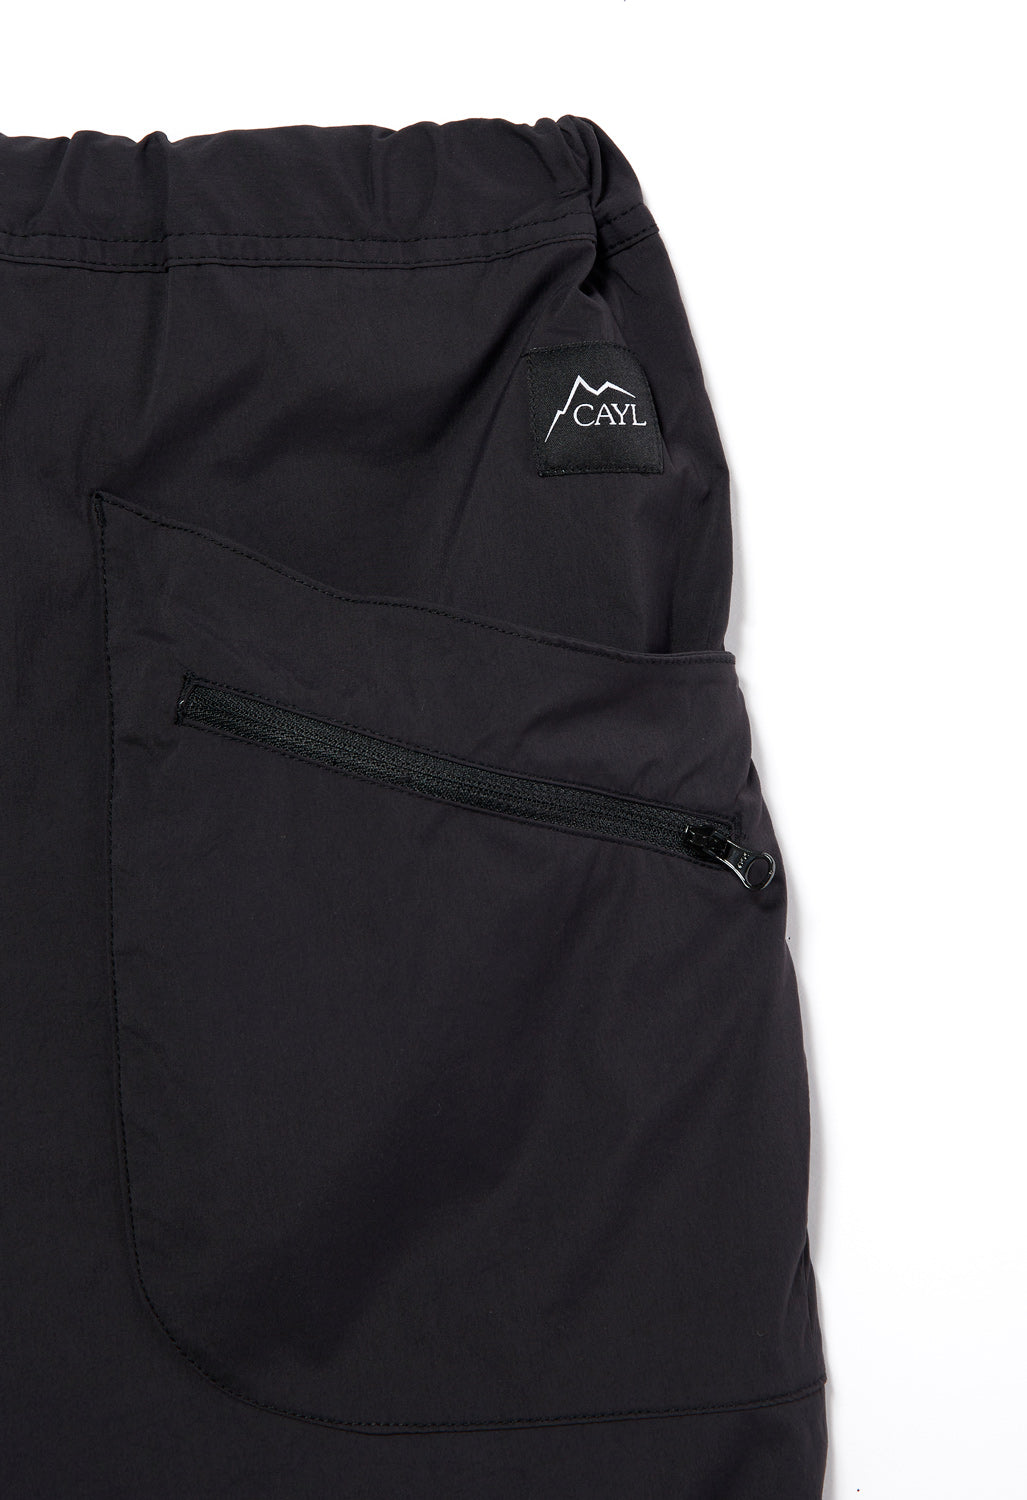 CAYL 8 Pocket Hiking Shorts - Black